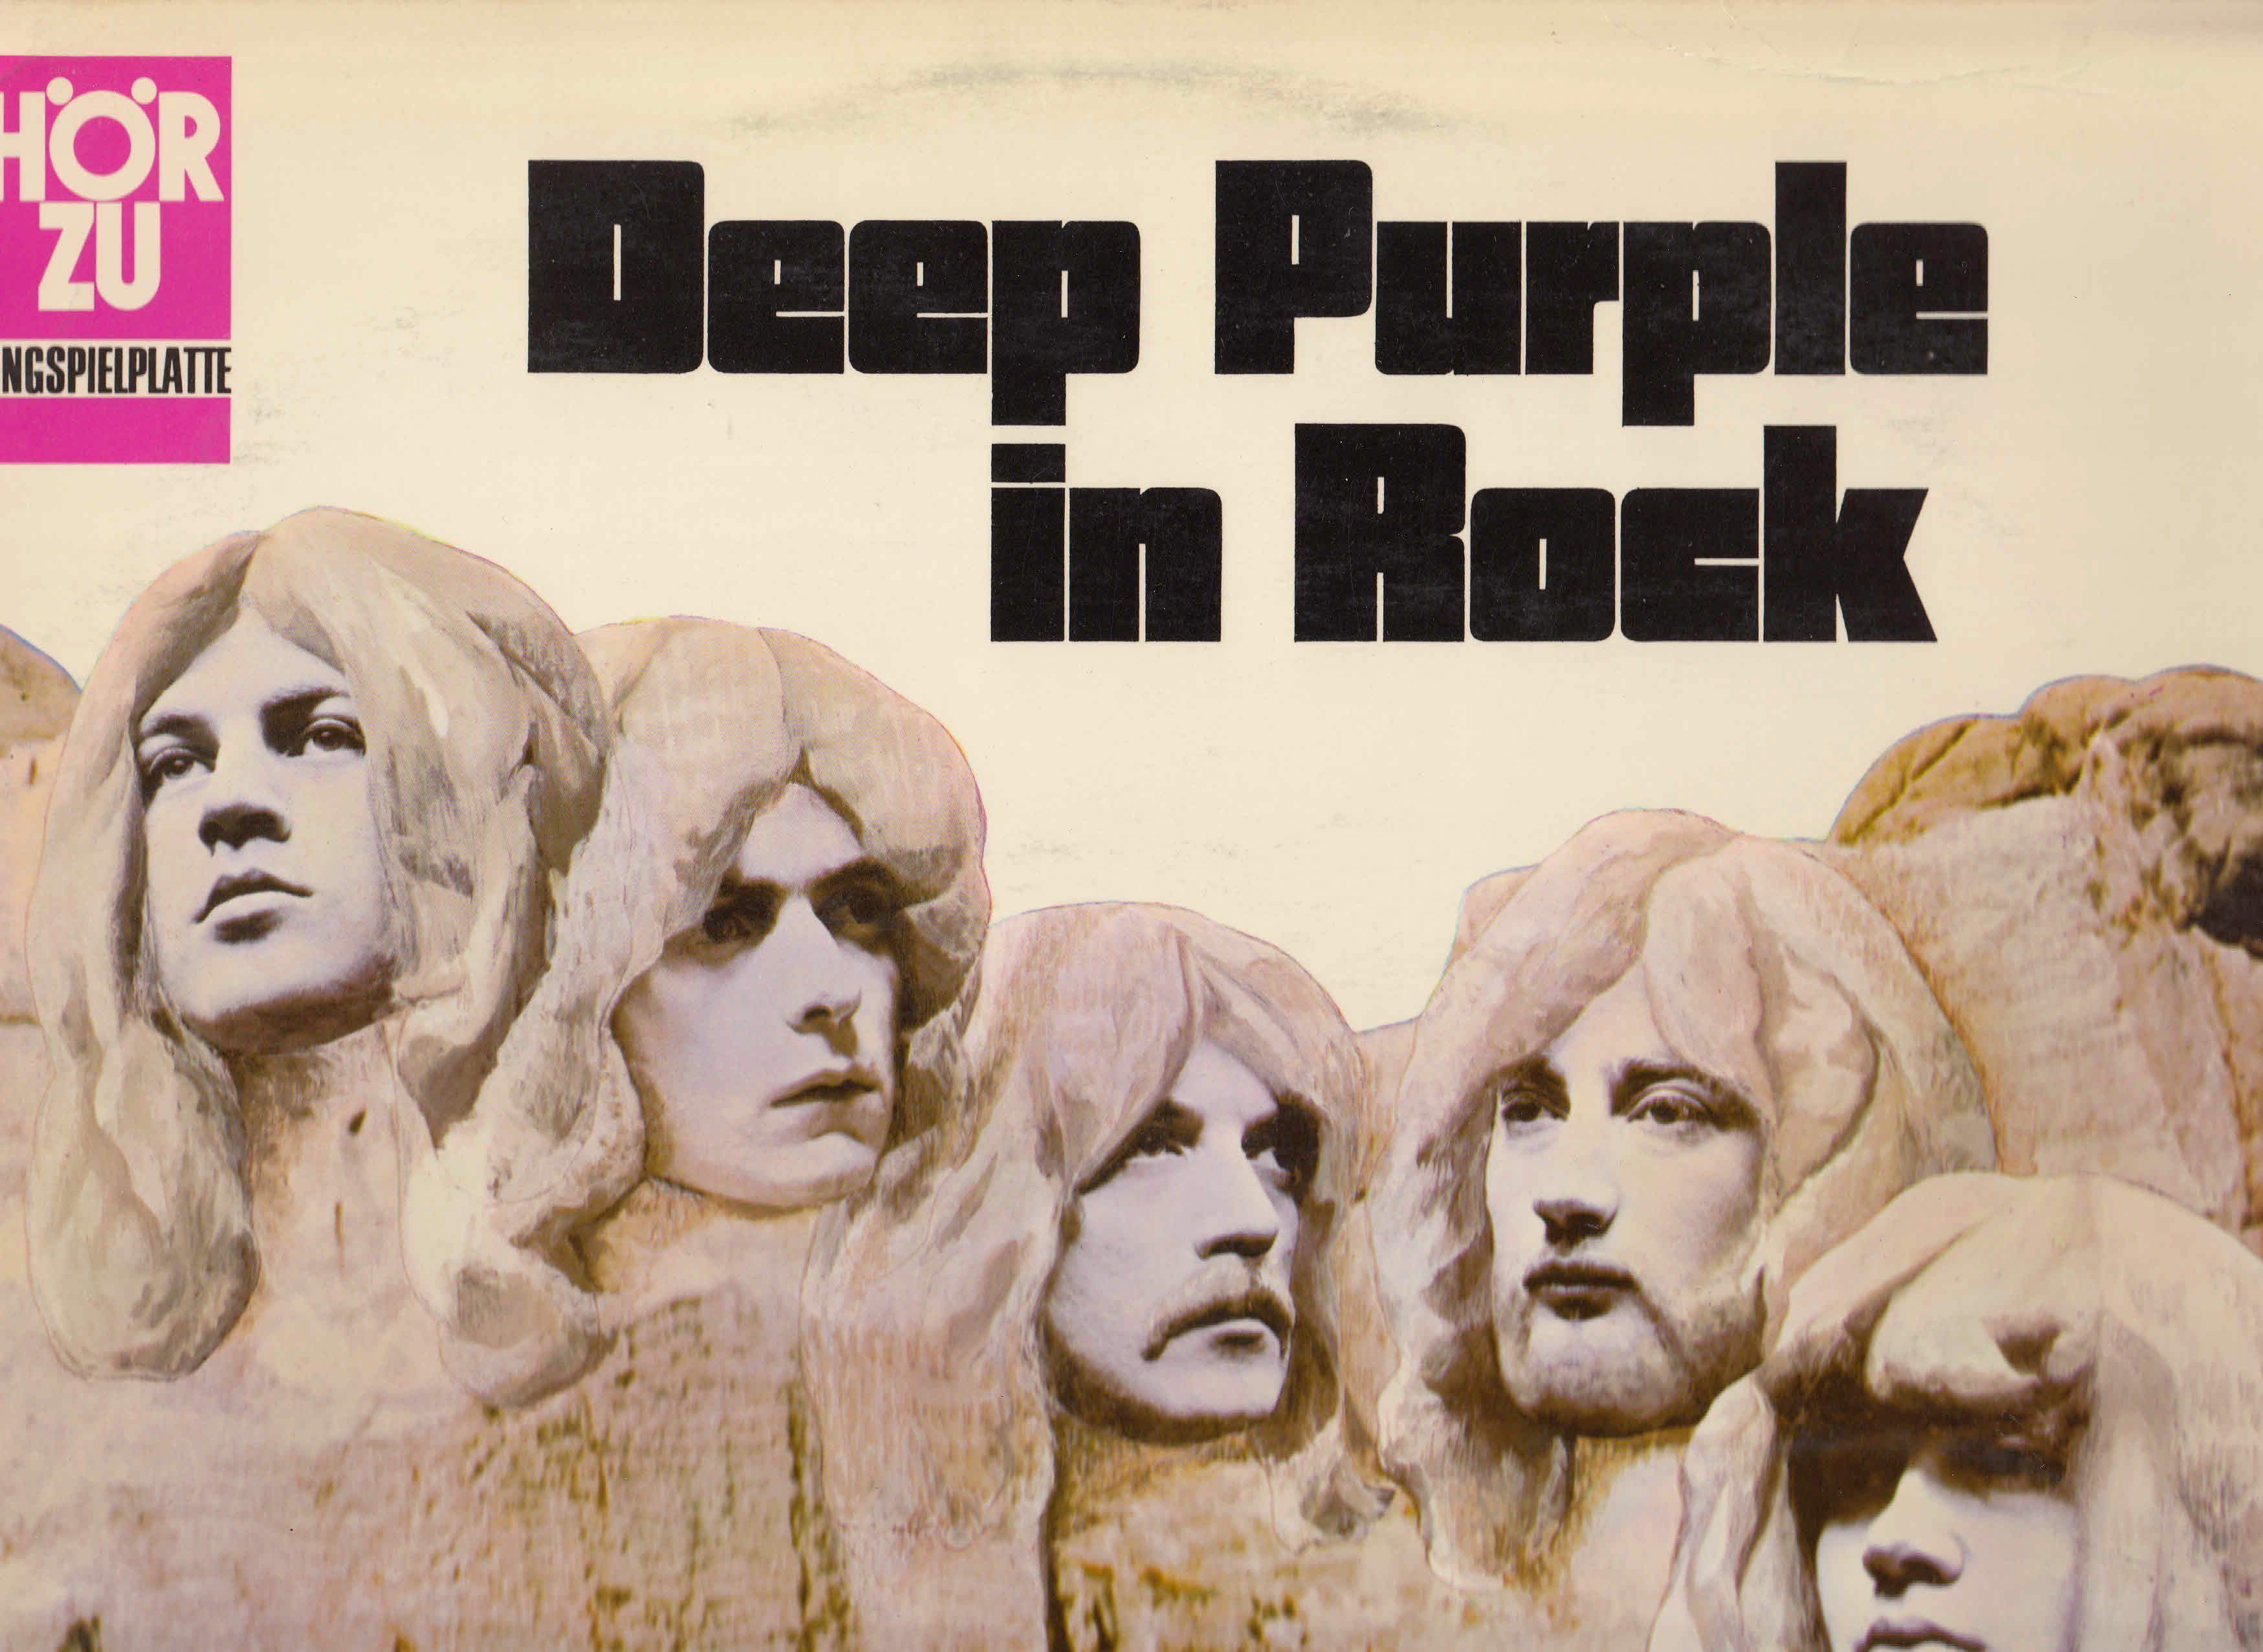 Deep Purple Wallpapers - Wallpaper Cave